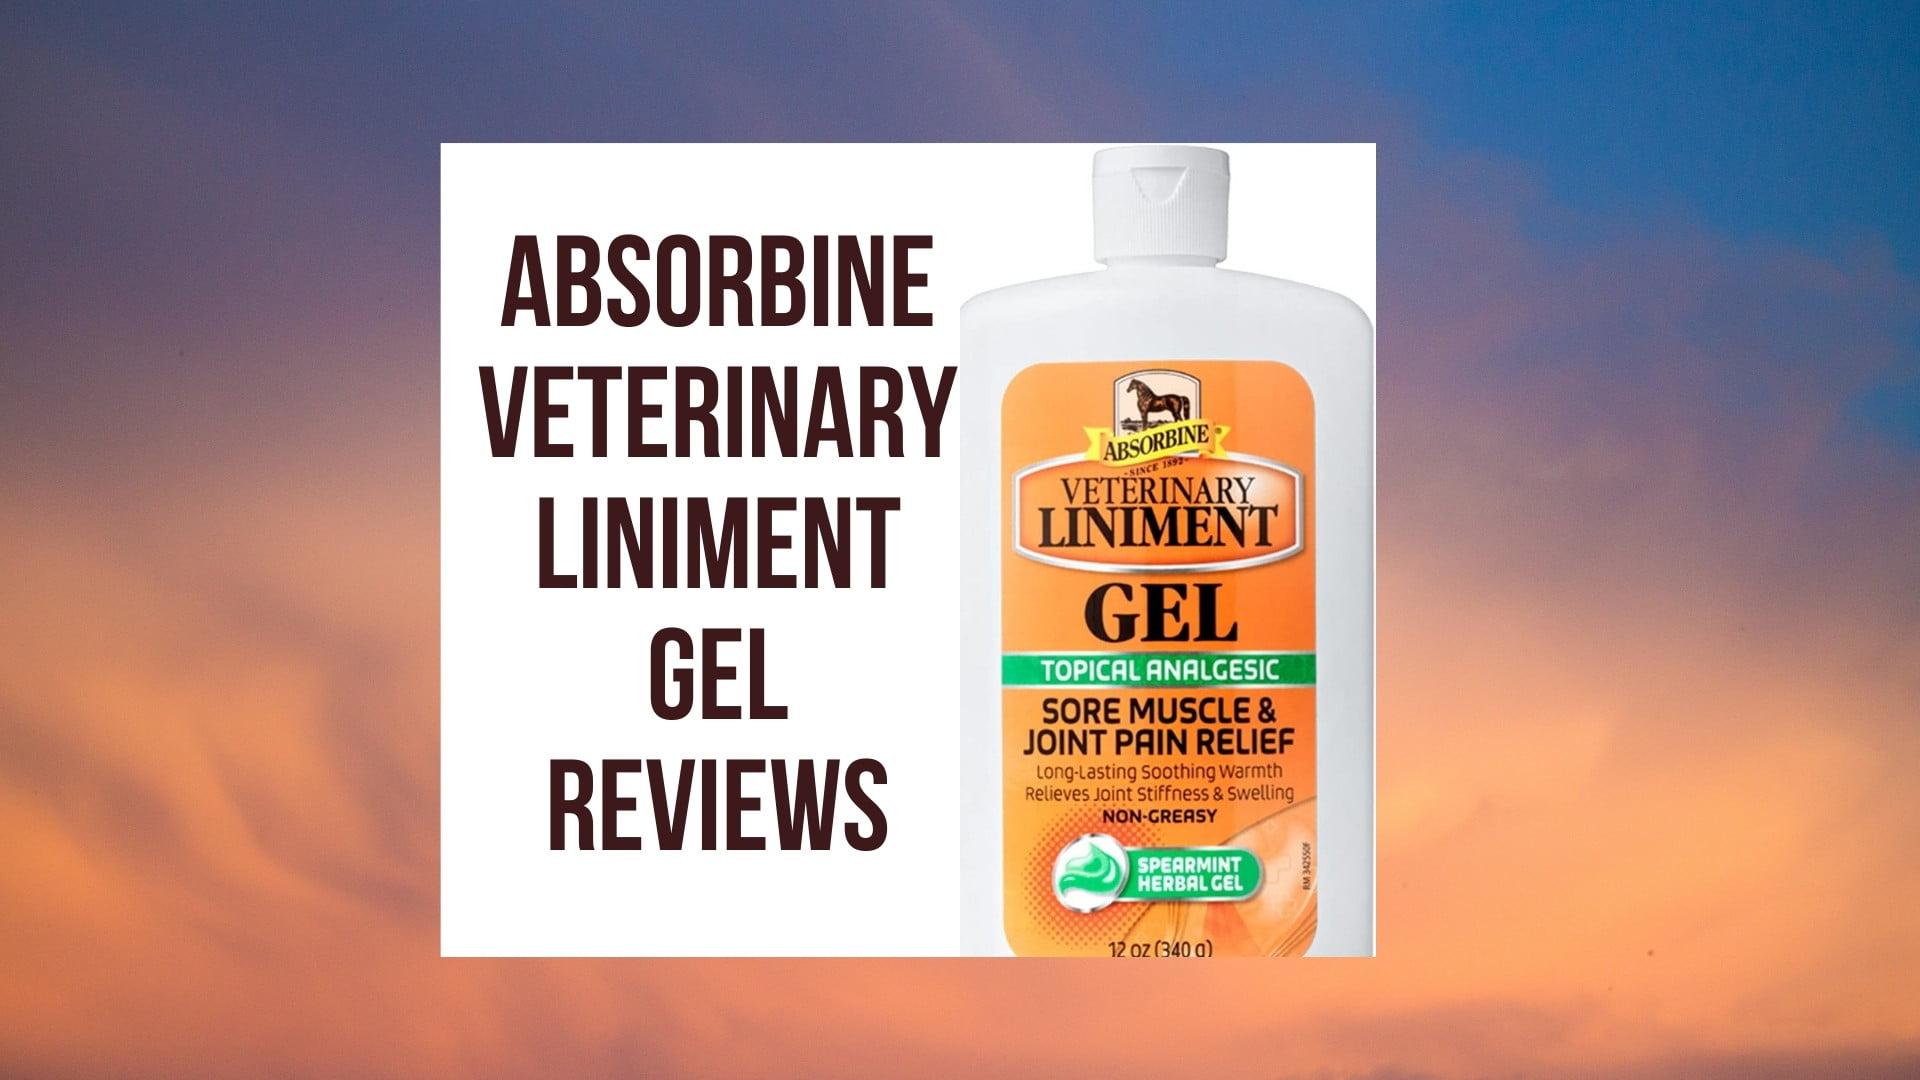 Absorbine Veterinary Liniment Gel Reviews